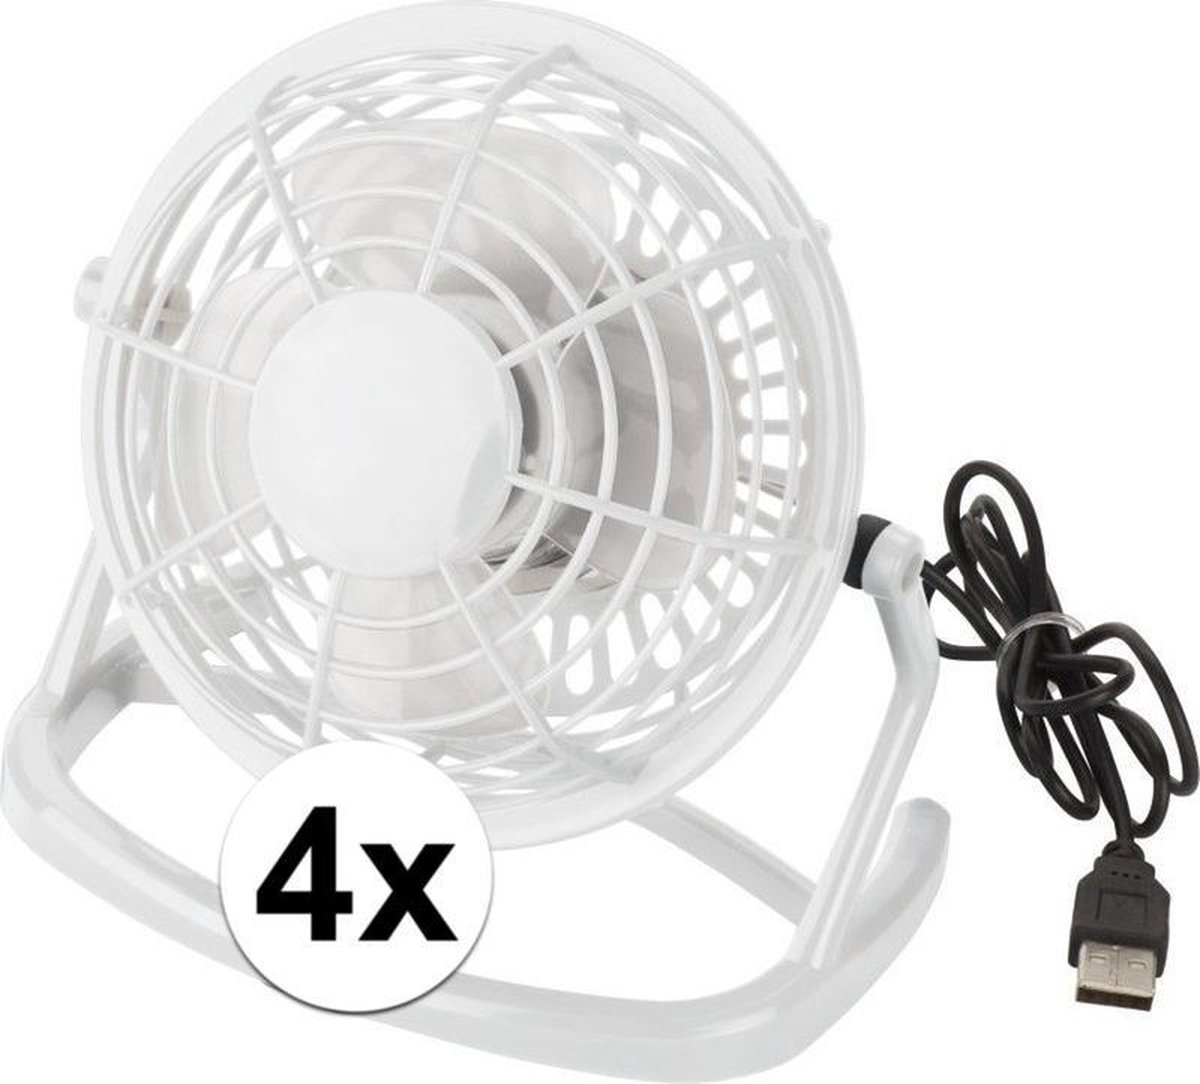 4 Stuks mini ventilator wit - USB aansluiting - tafelventilator